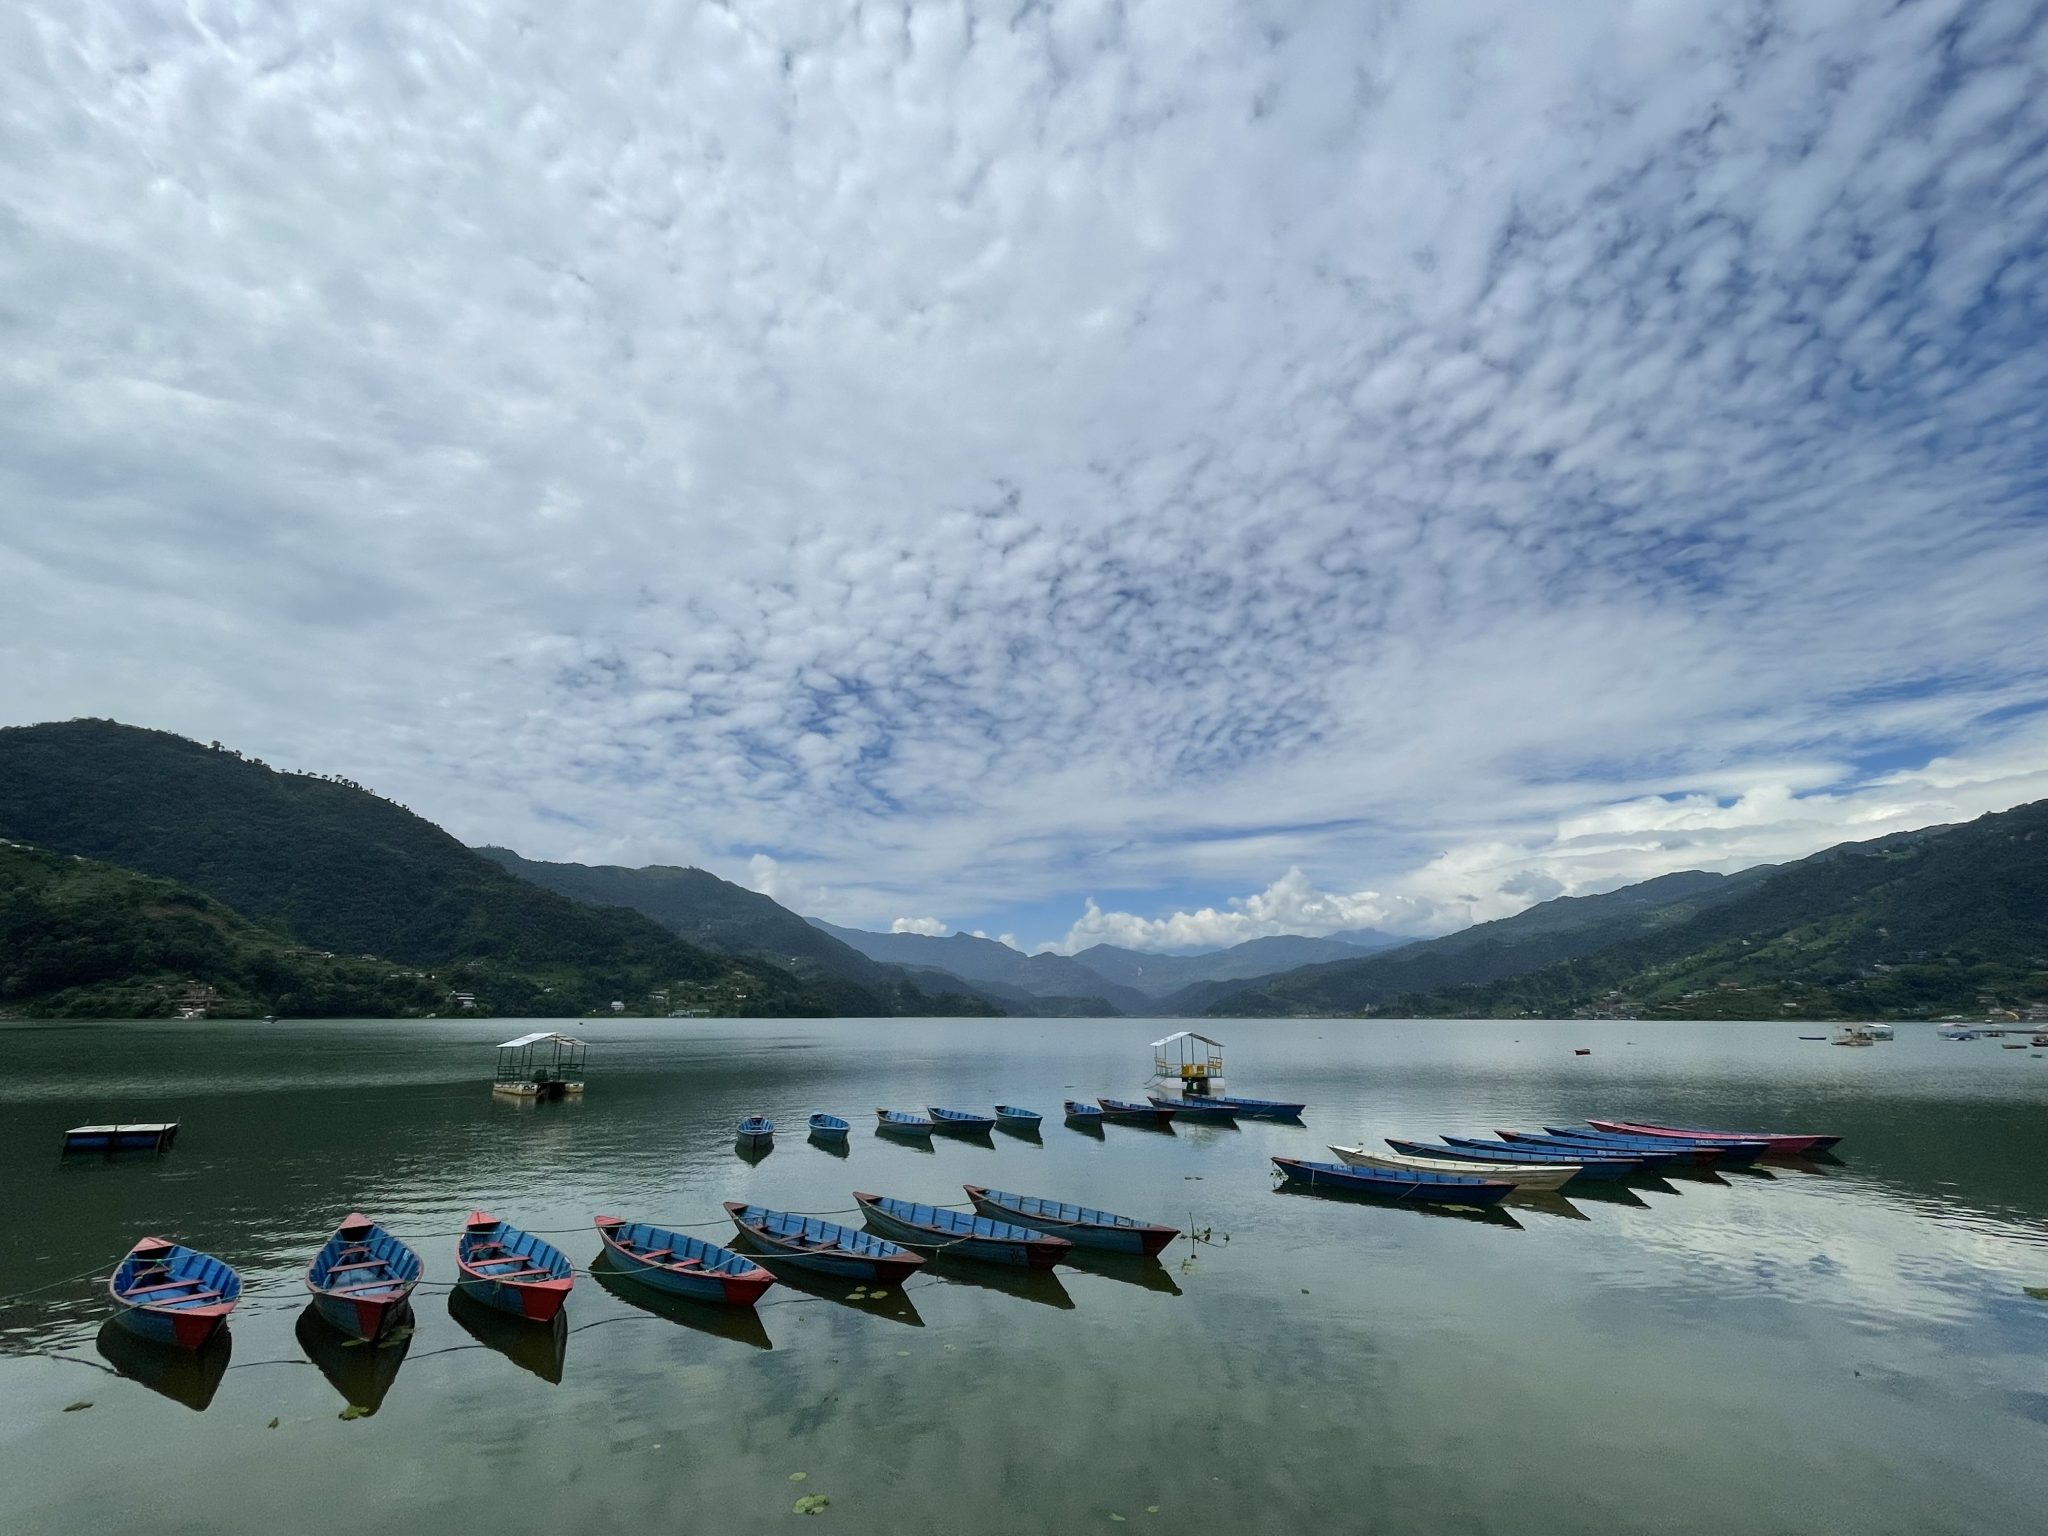 Morning view of Phewa Lake, Pokhara, Nepal.